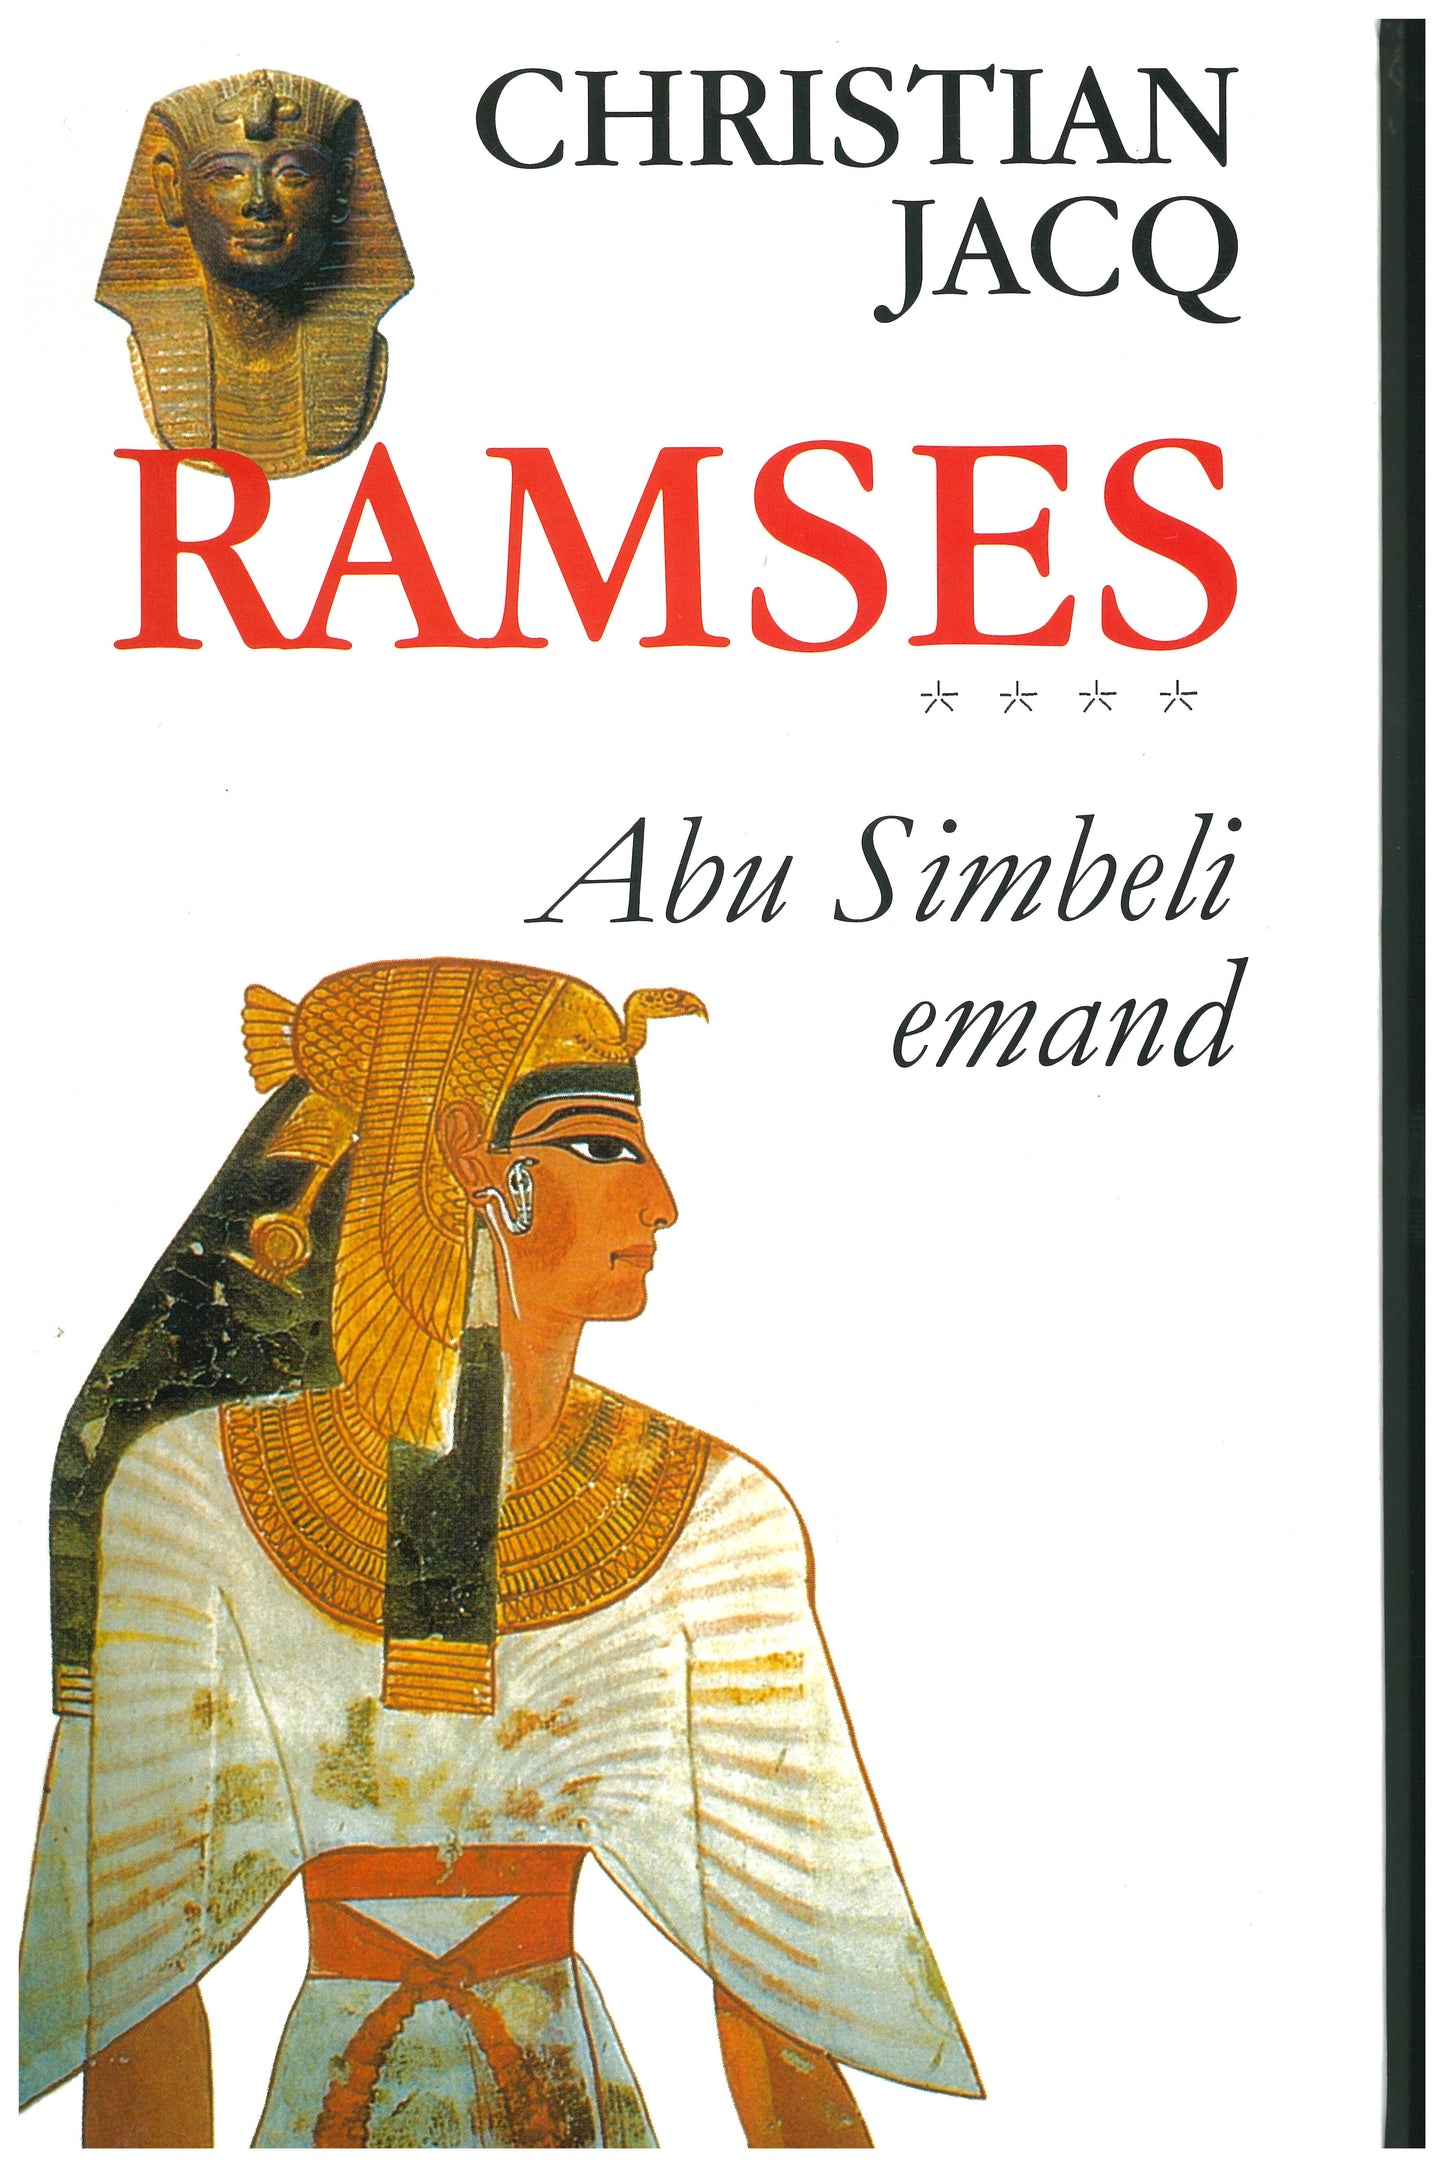 Ramses lV Abu Simbeli emand